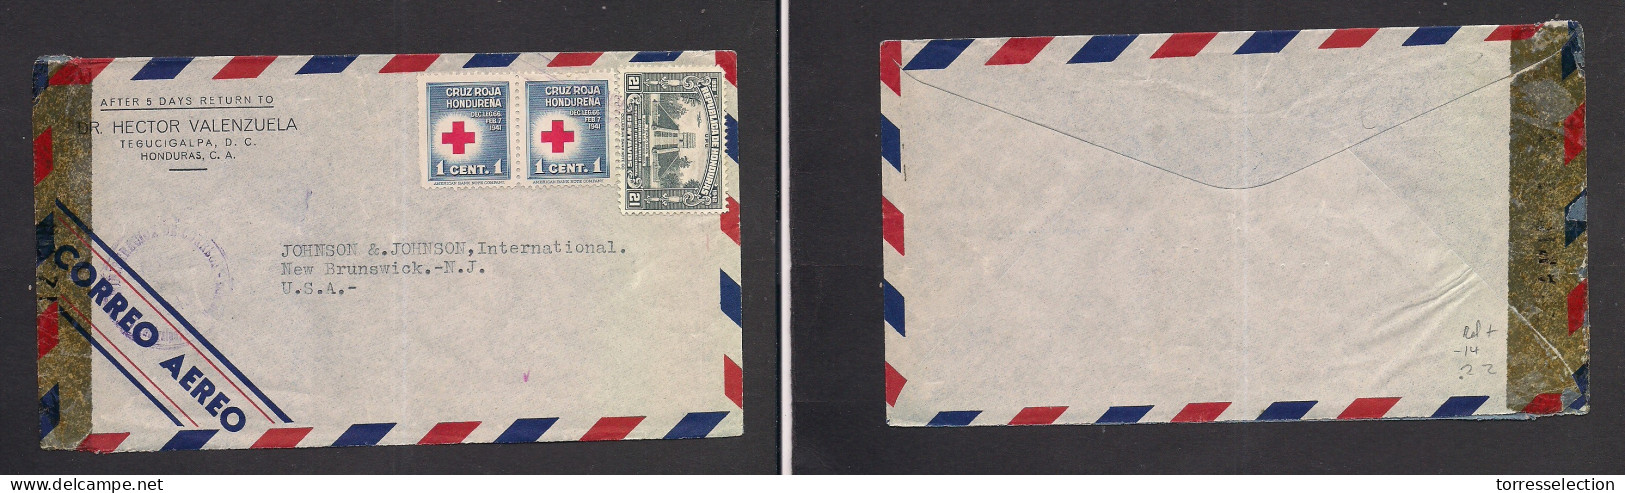 HONDURAS. C, 1941. Tegucigalpa - USA, New Brunswick, NJ. Air Censored Red Cross Multifkd Envelope. XSALE. - Honduras